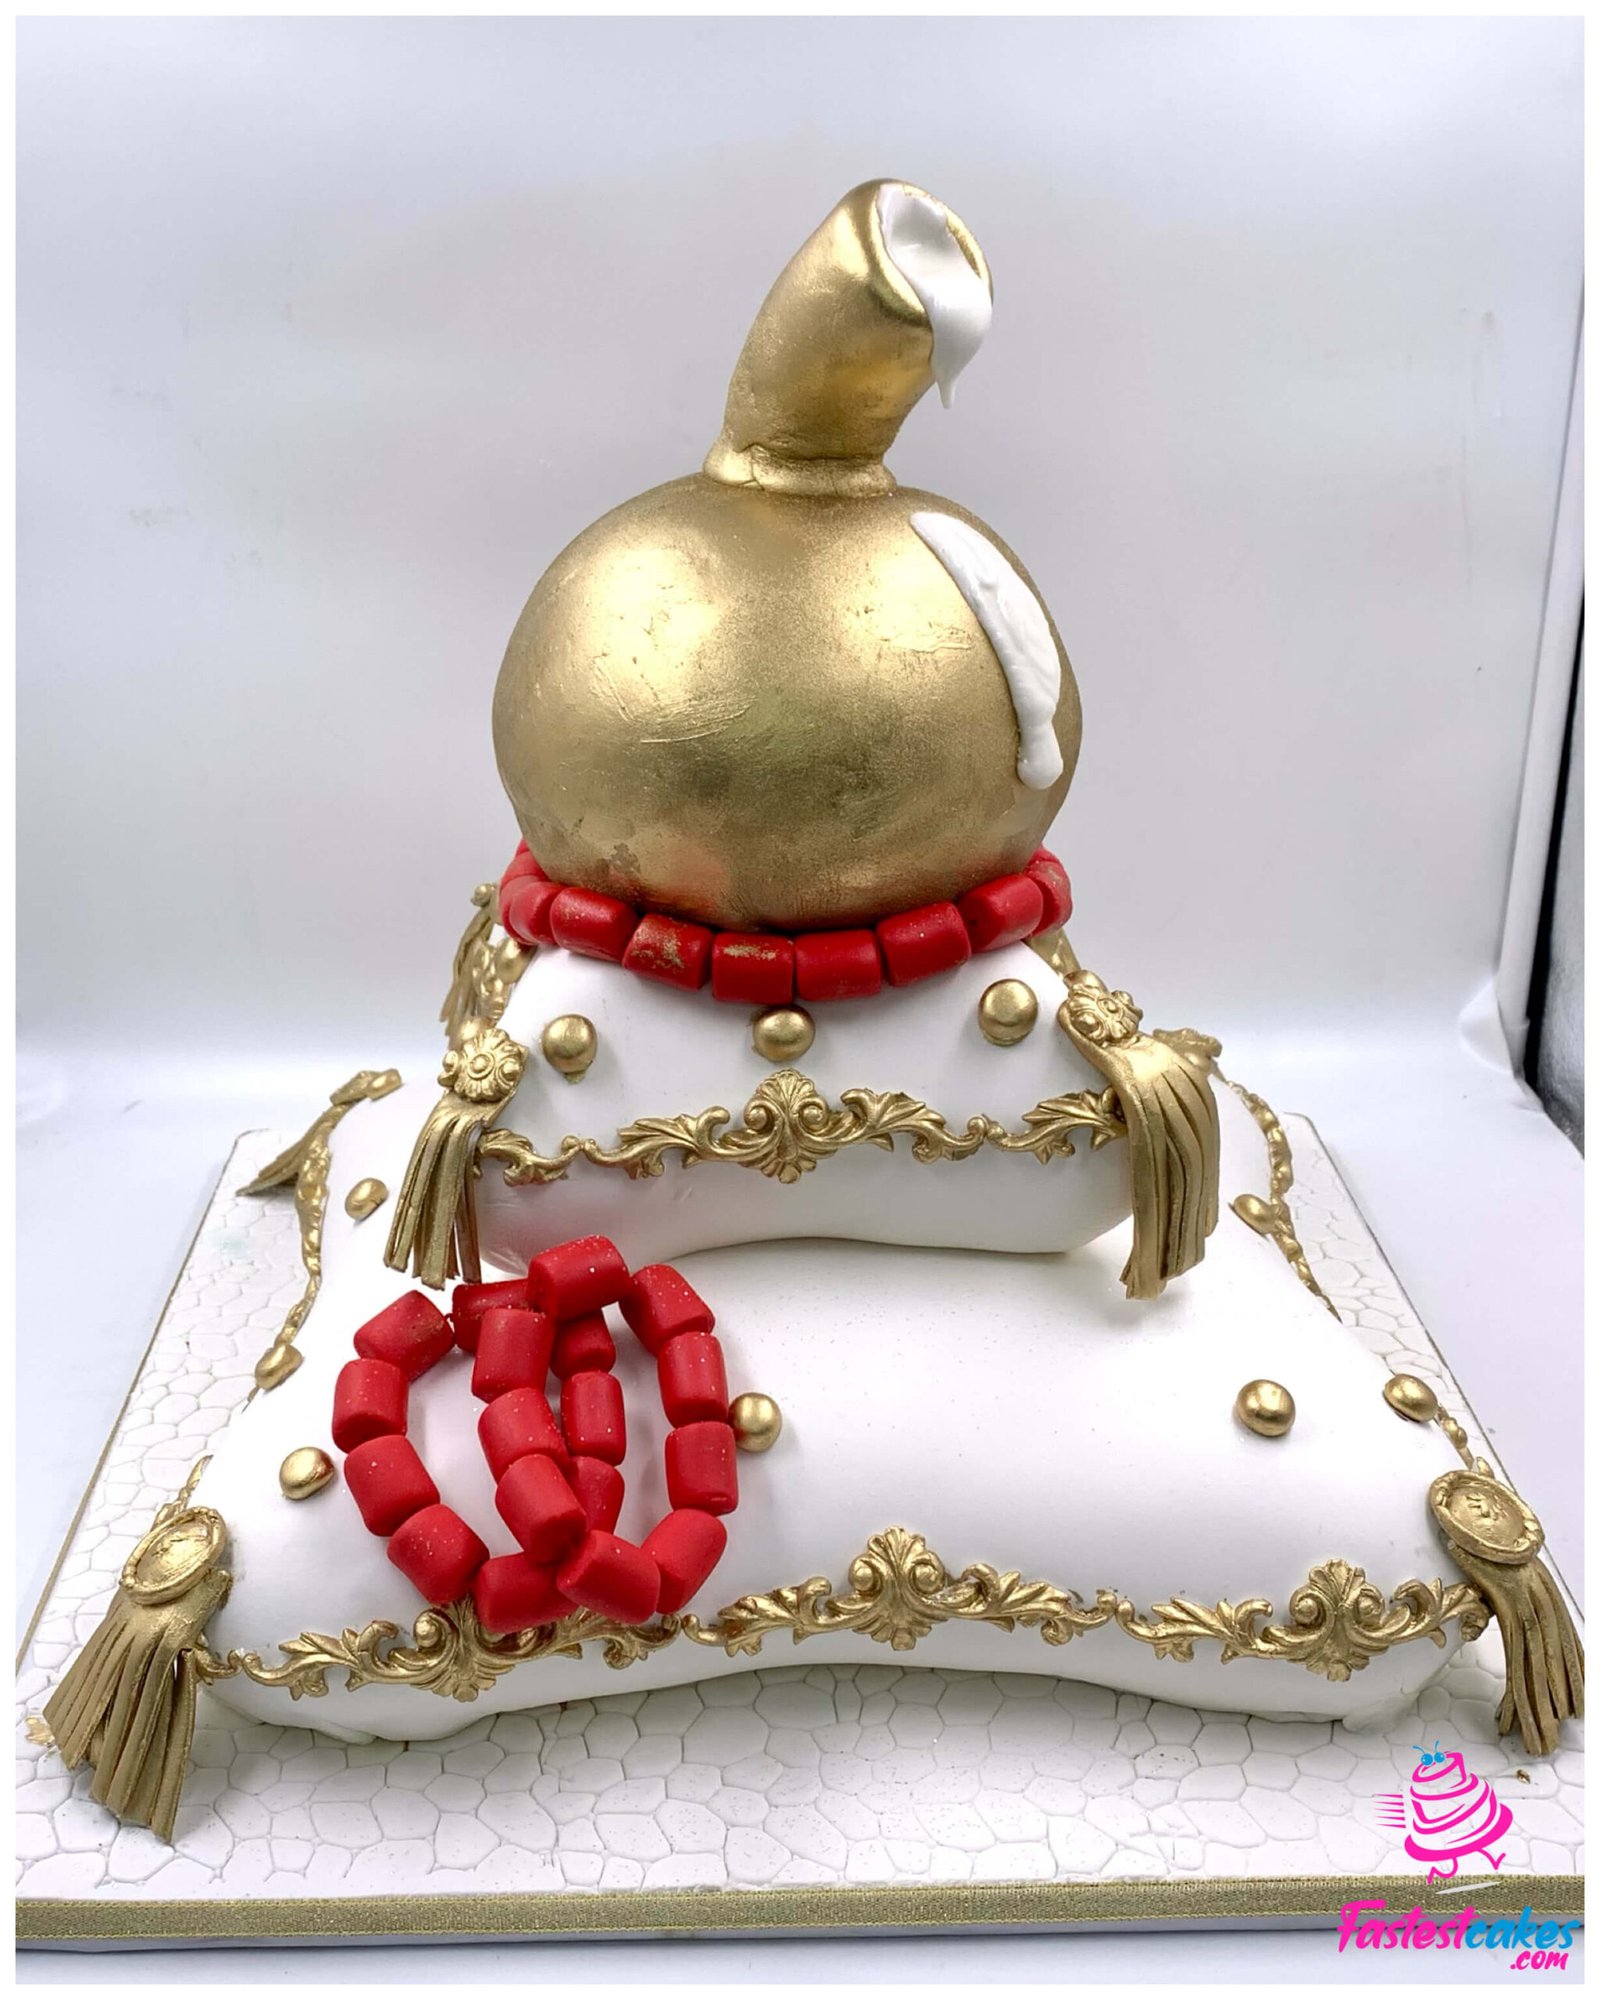 Yoruba traditional wedding cakes: Best ideas - Legit.ng